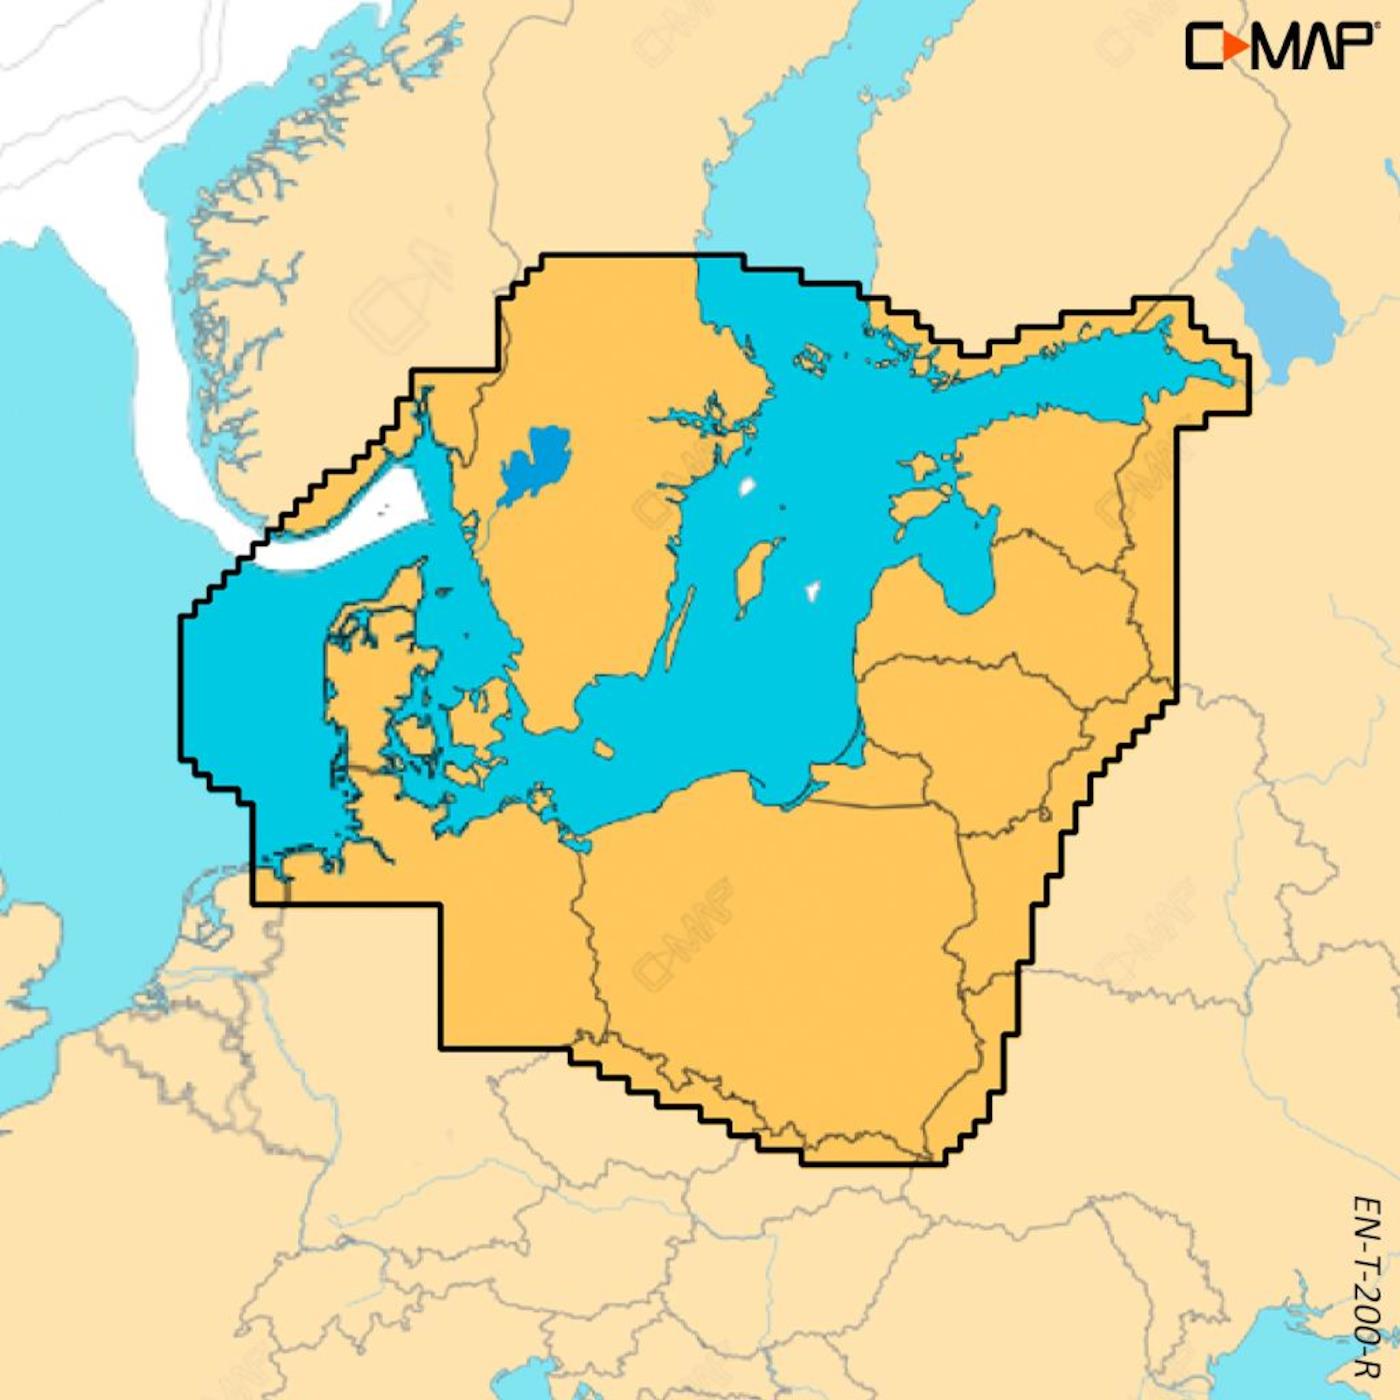 C-MAP Discover X Nordeuropa (Skagerrak und Kattegat, Ostsee, Baltikum) EN-T-200